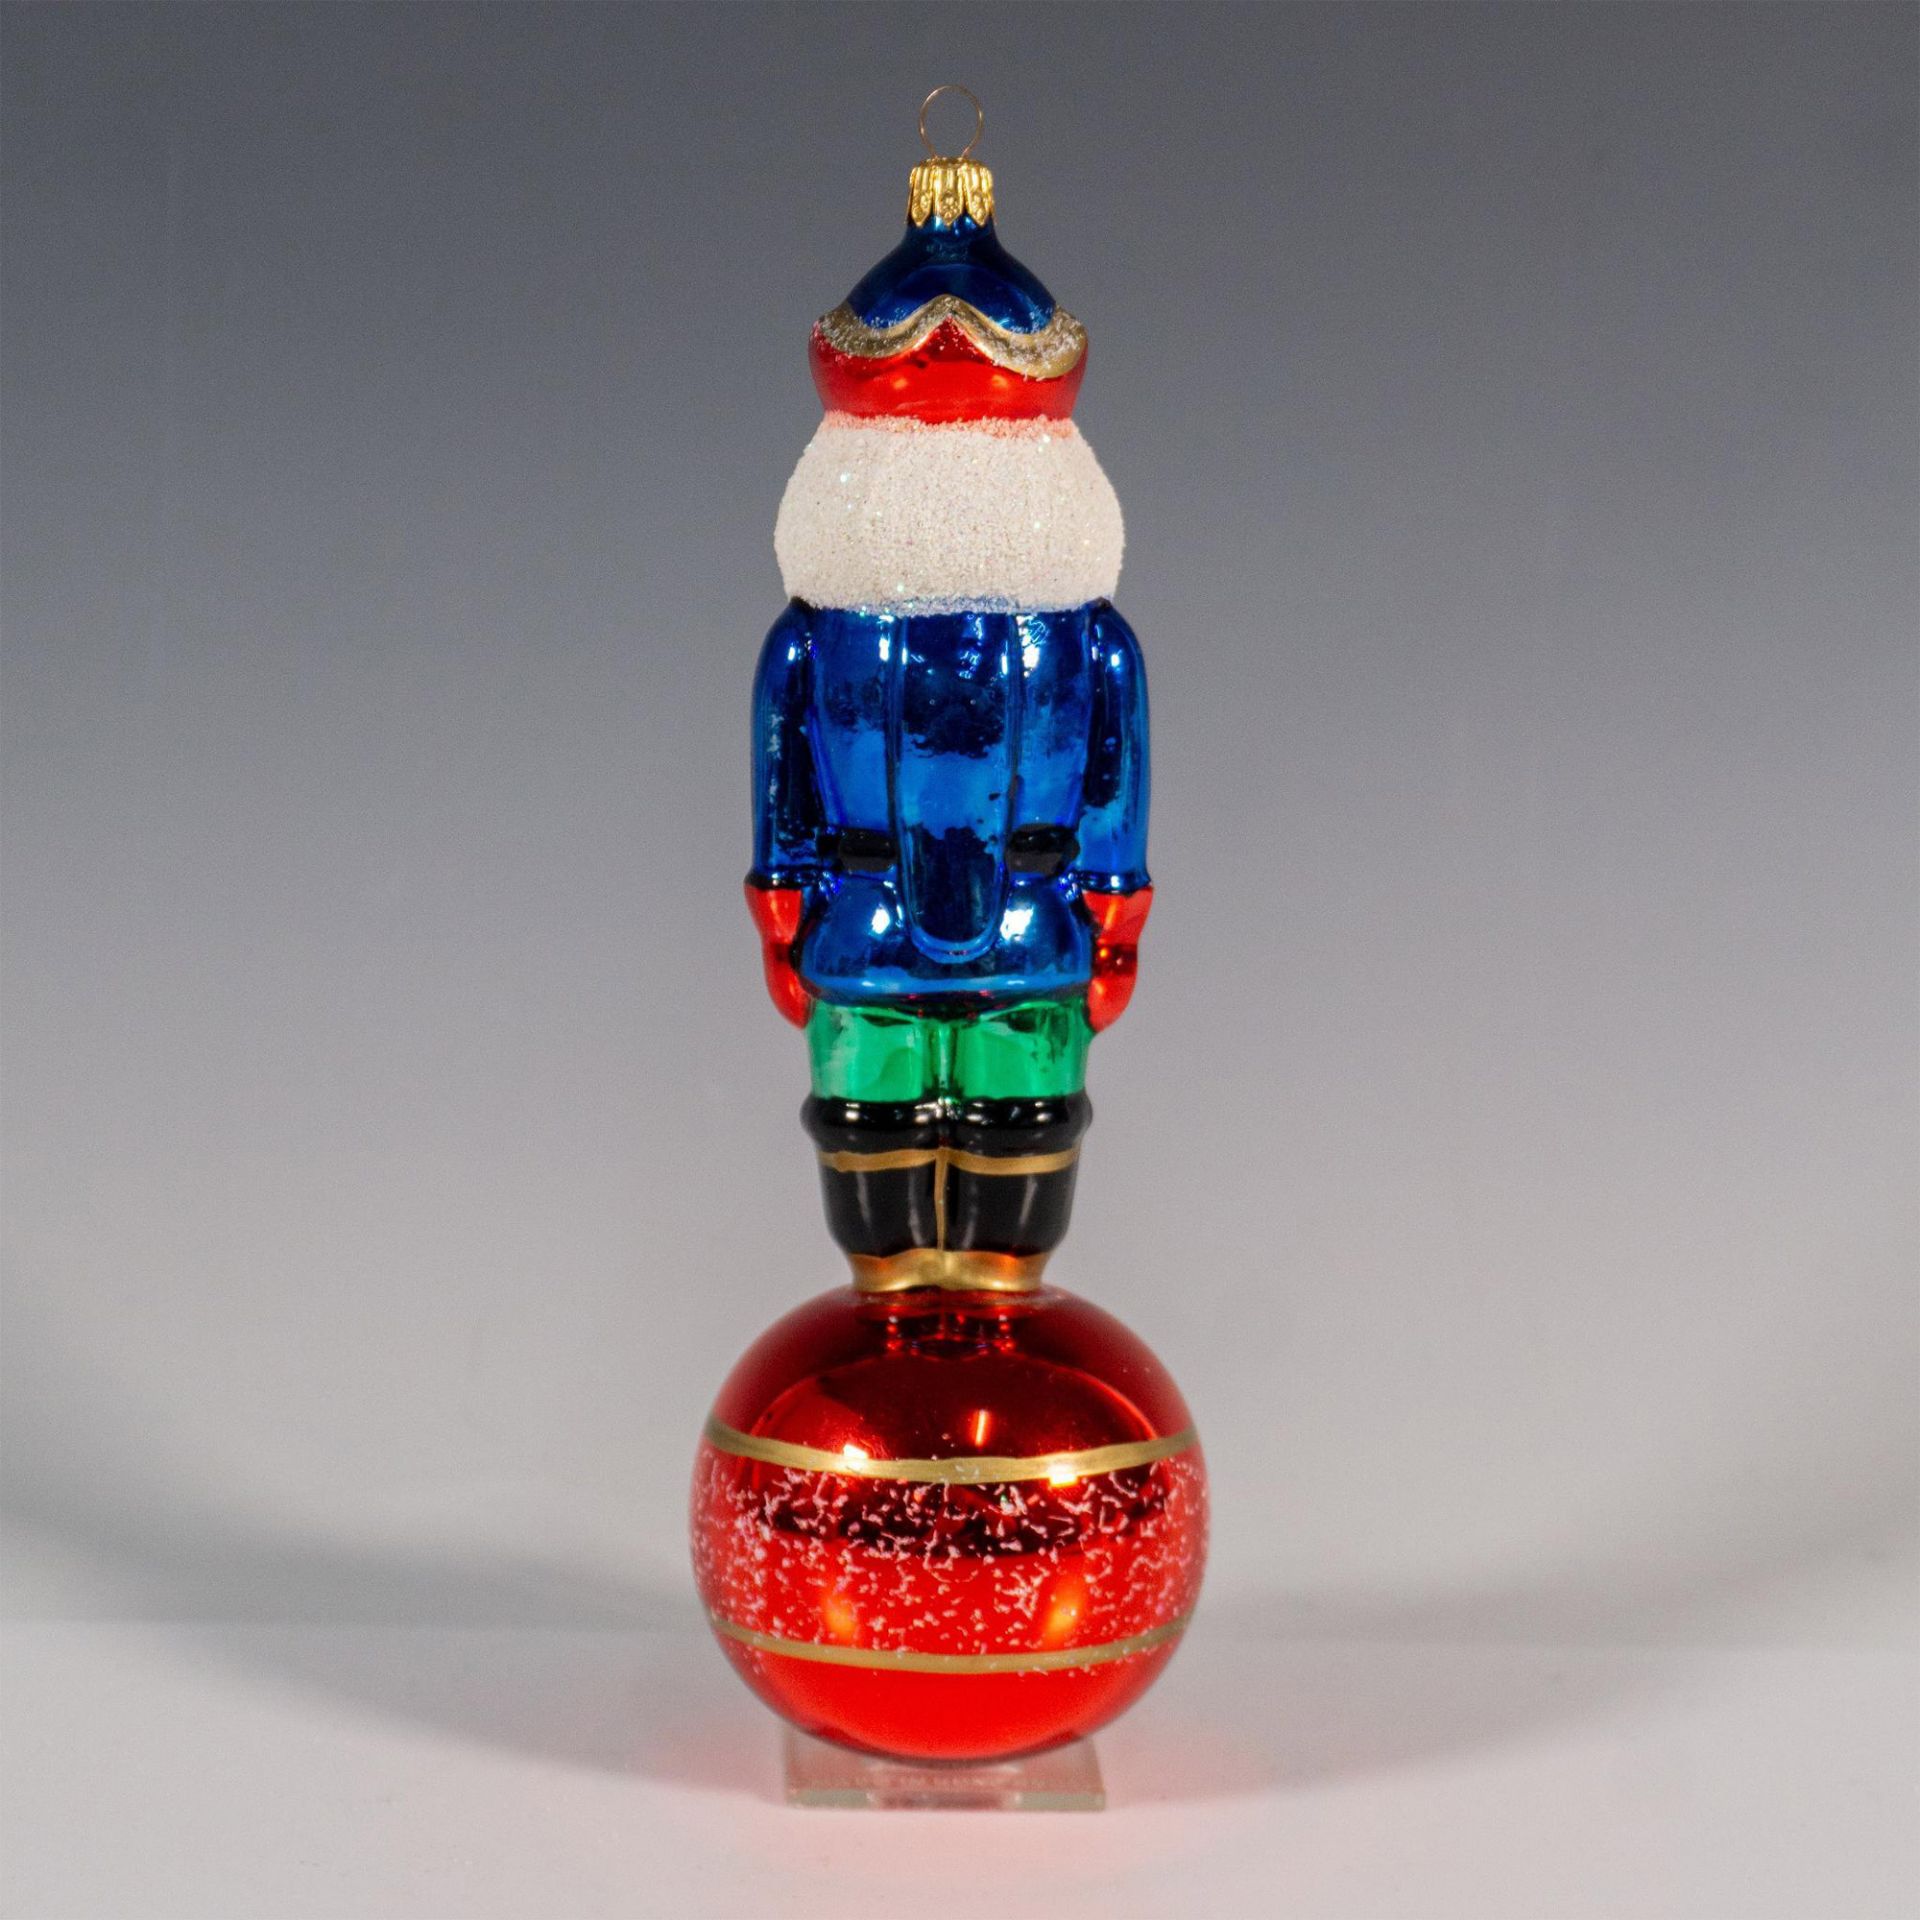 Radko Style Glass Nutcracker Christmas Ornament - Image 2 of 2